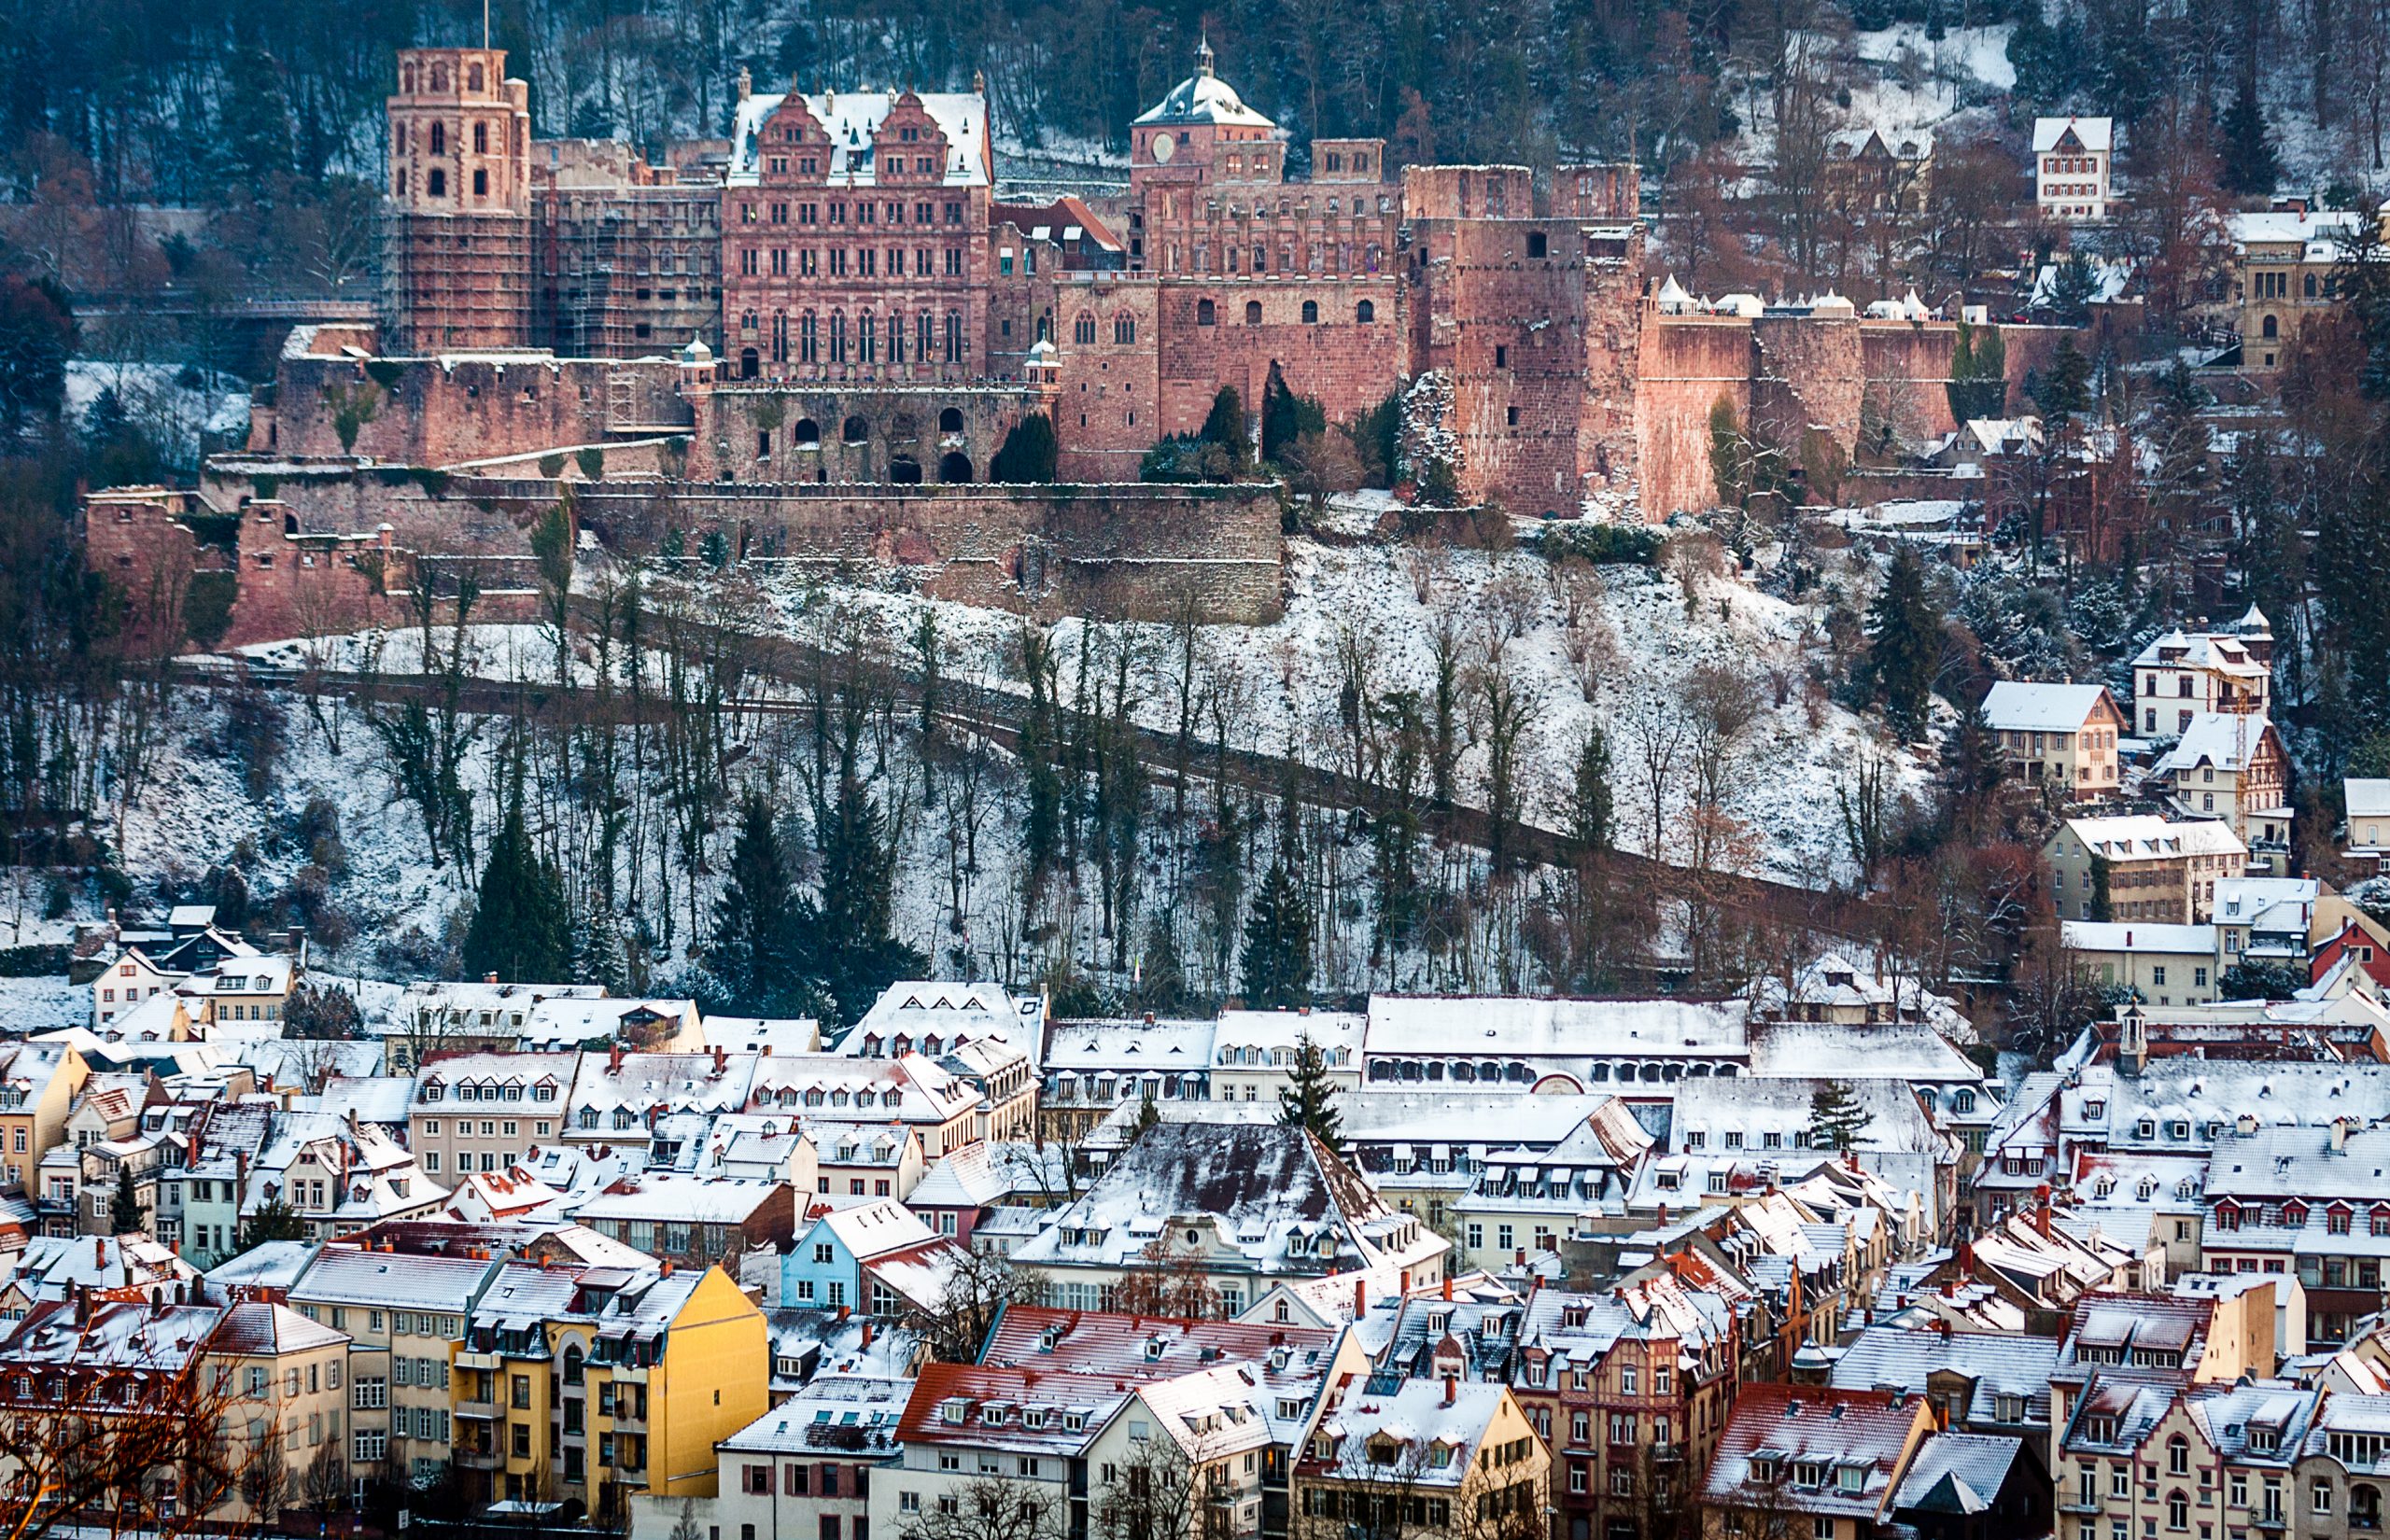 Heidelberg Castle in snow - bets winter wonderland destinations